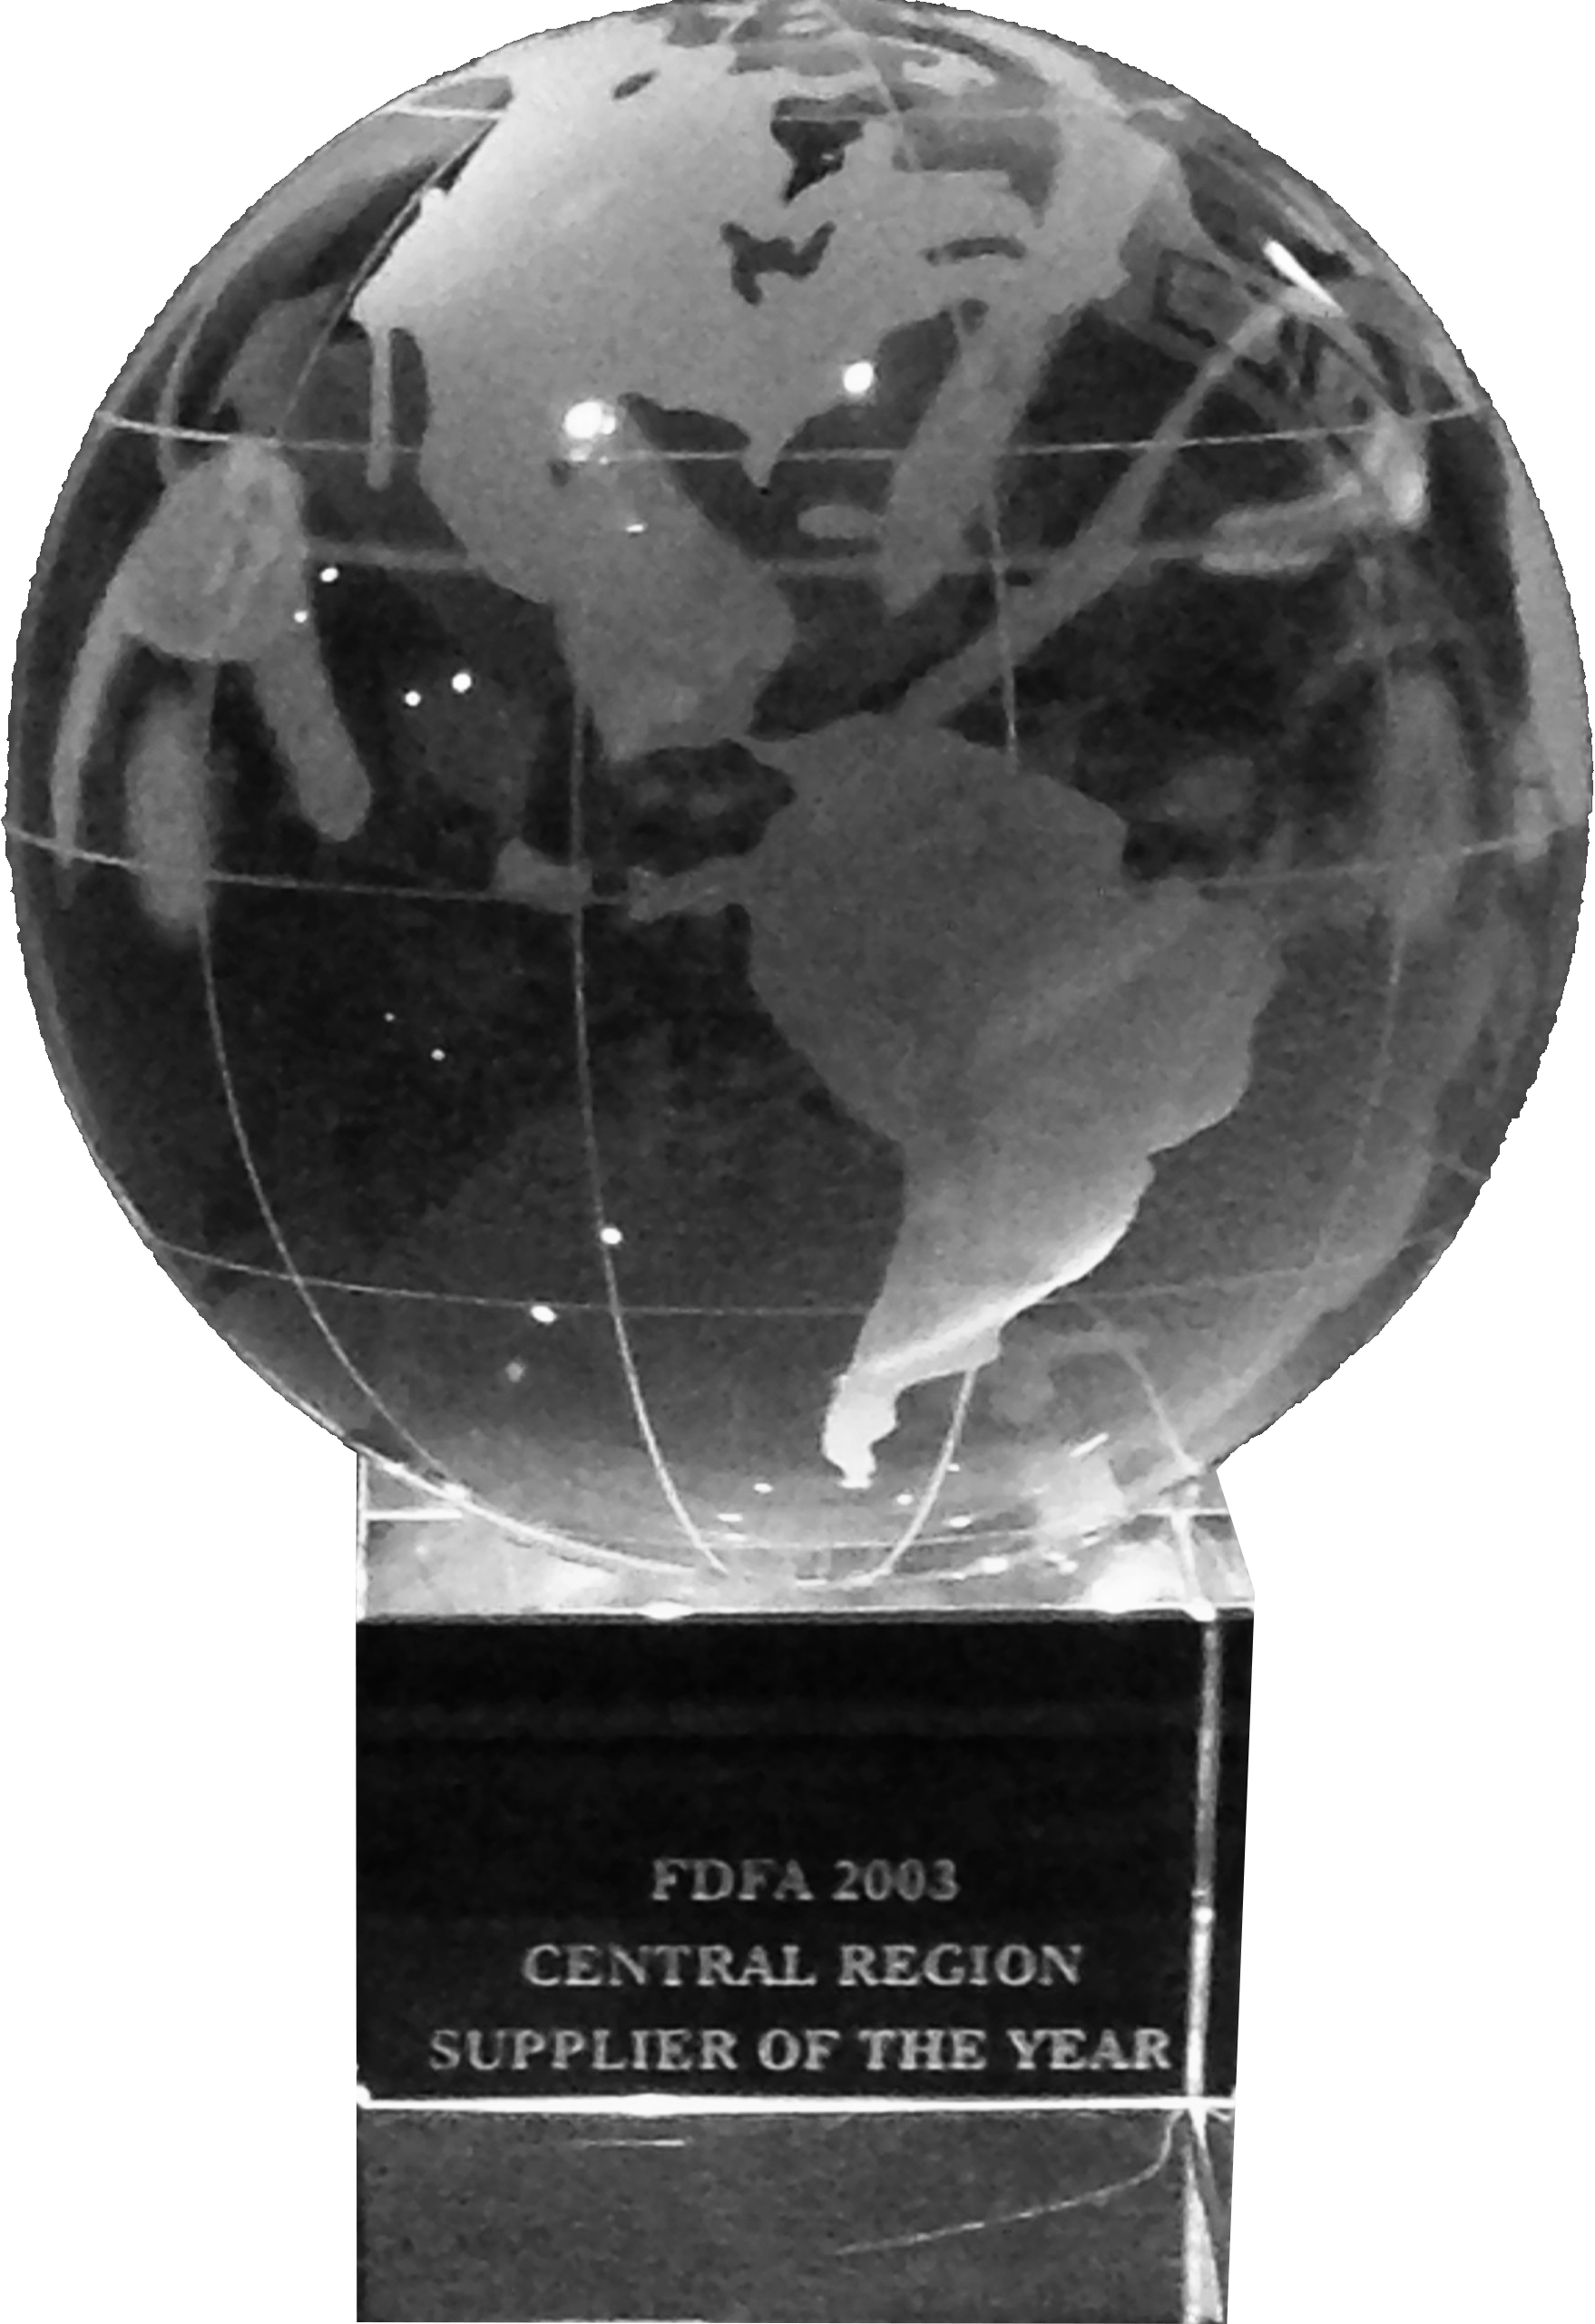 FDFA Central Region Supplier of the Year Award